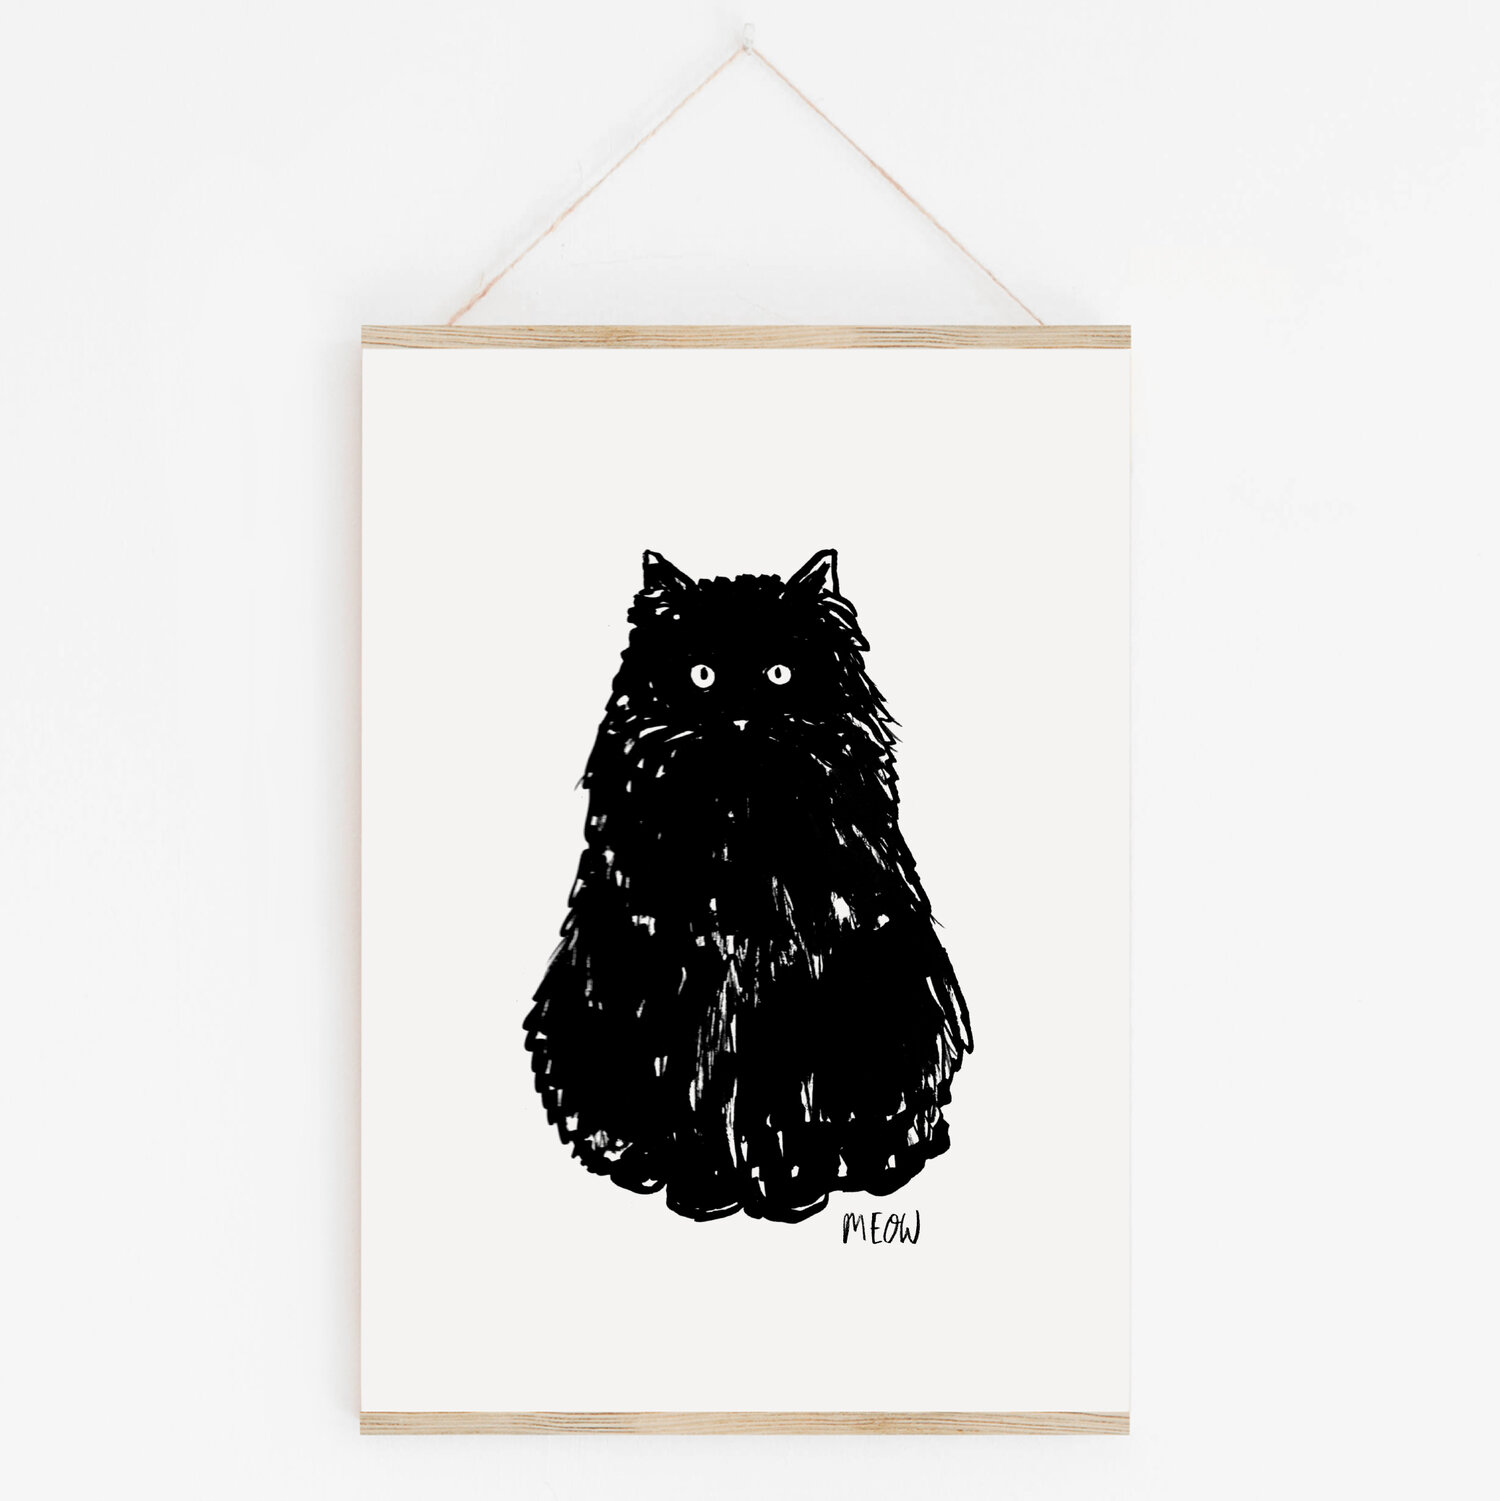 Illustration Art  Digital Printable Home decor Black Cat with Flowers Digital Art Print